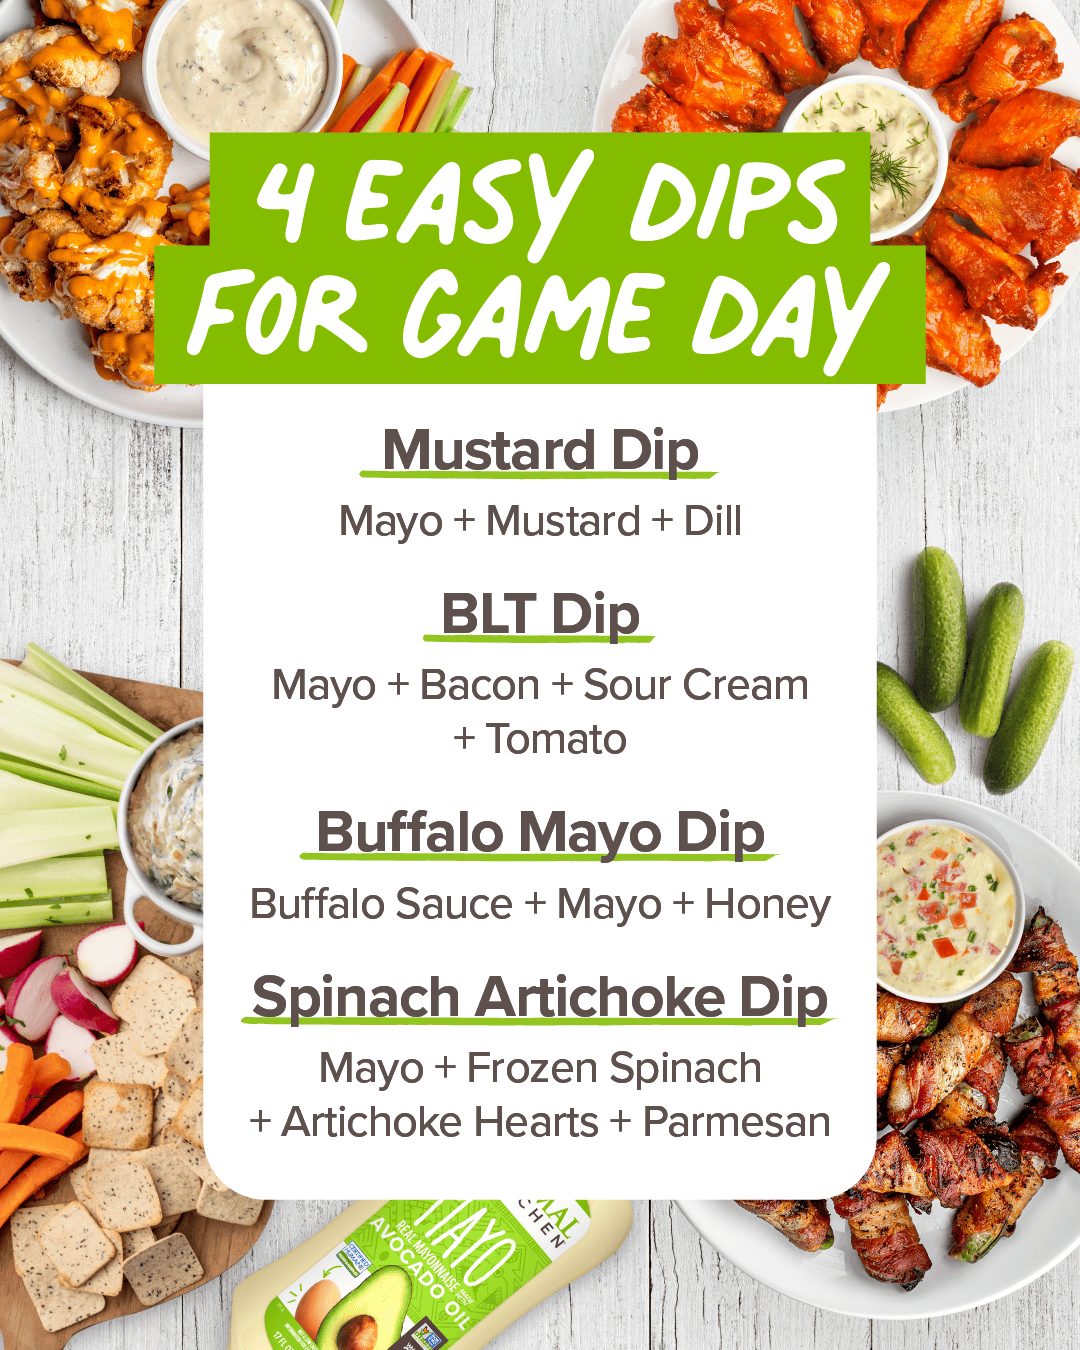 4 Easy Dips for Game Day: Mustard Dip, BLT Dip, Buffalo Mayo Dip, Spinach Artichoke Dip